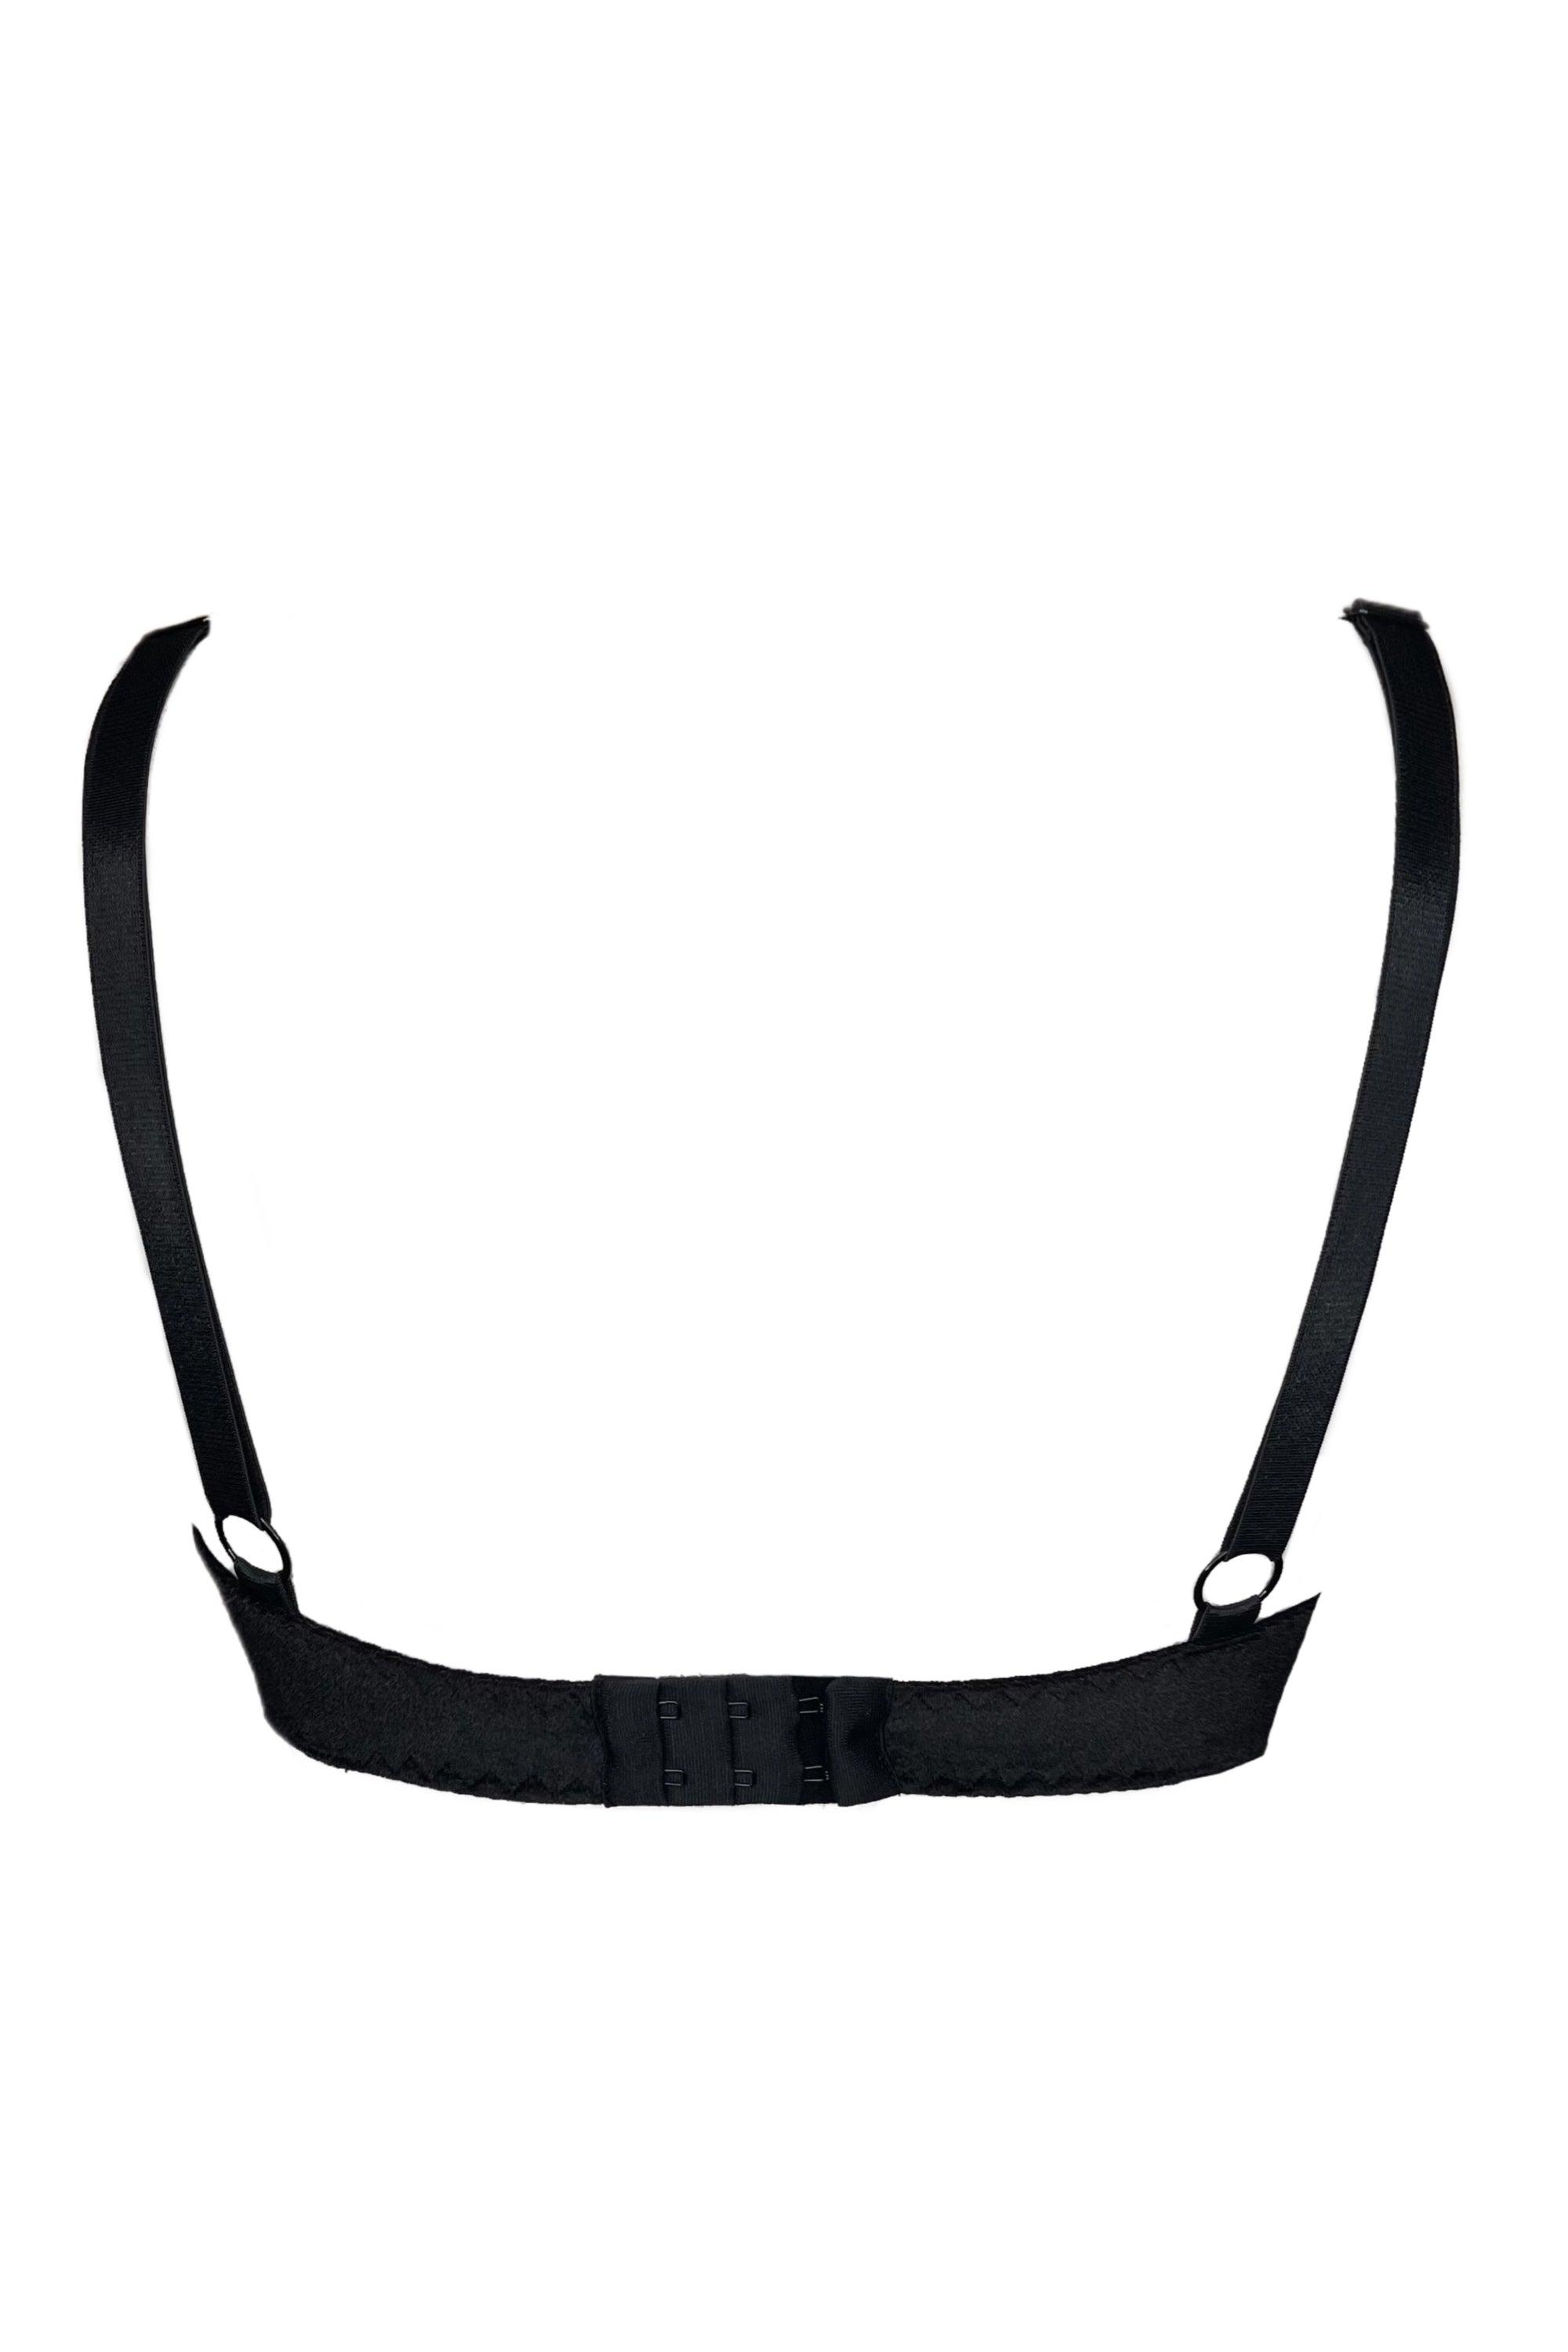 Velvetta black soft bra with chains - yesUndress